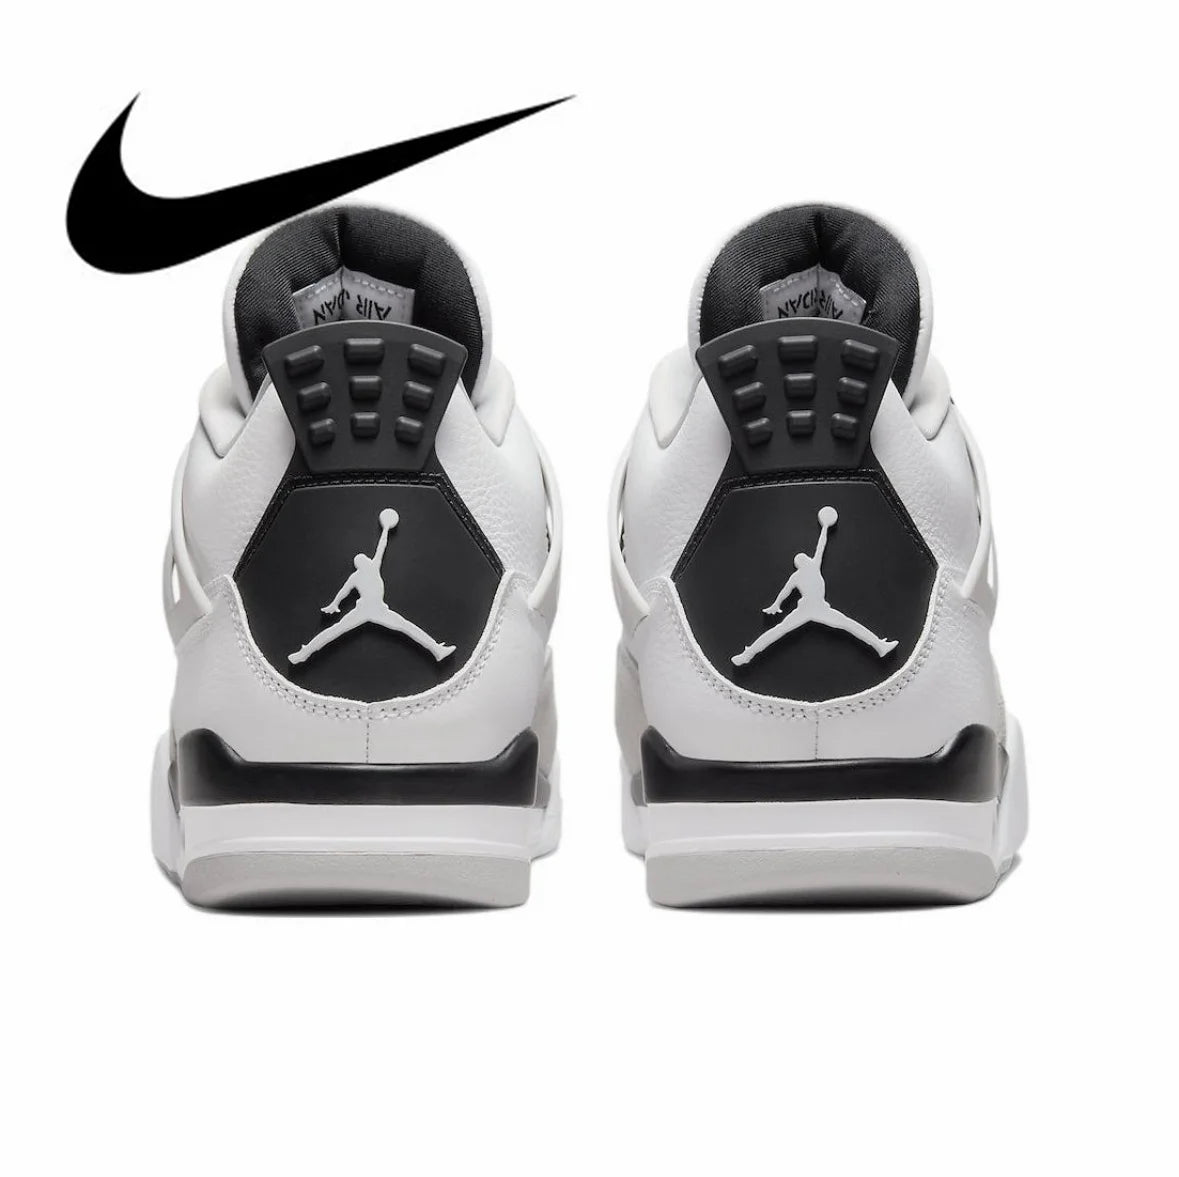 
                  
                    Jordan 4 Retro Military Black basketball shoes For Men's Women's Classics Outdoor Sports Sneakers WHITE BLACK NEUTRAL GREY
                  
                